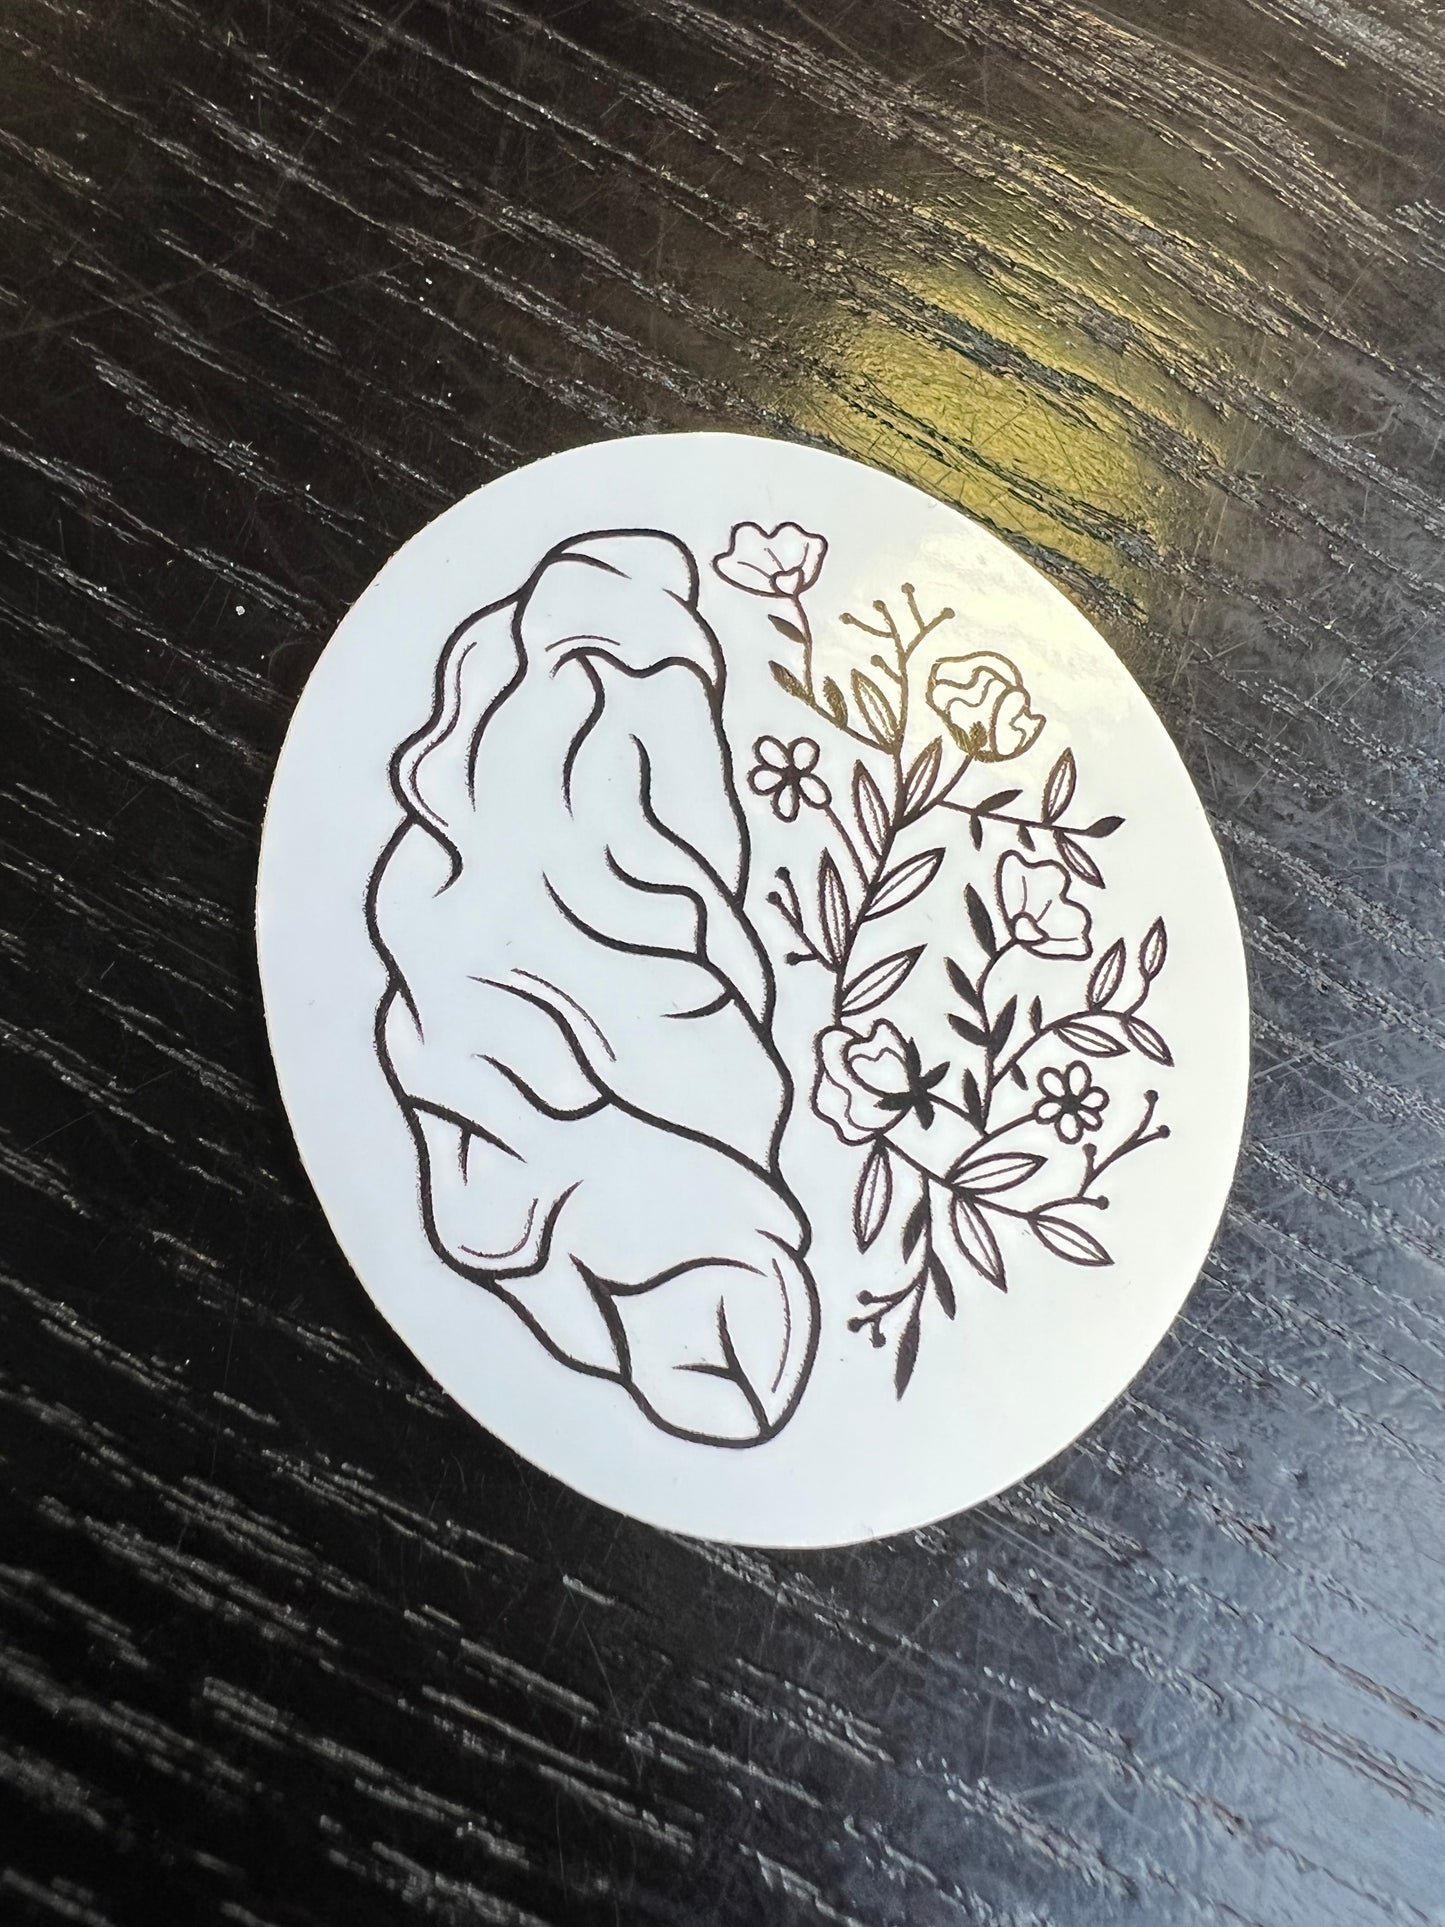 Aesthetic brain, mental health sticker